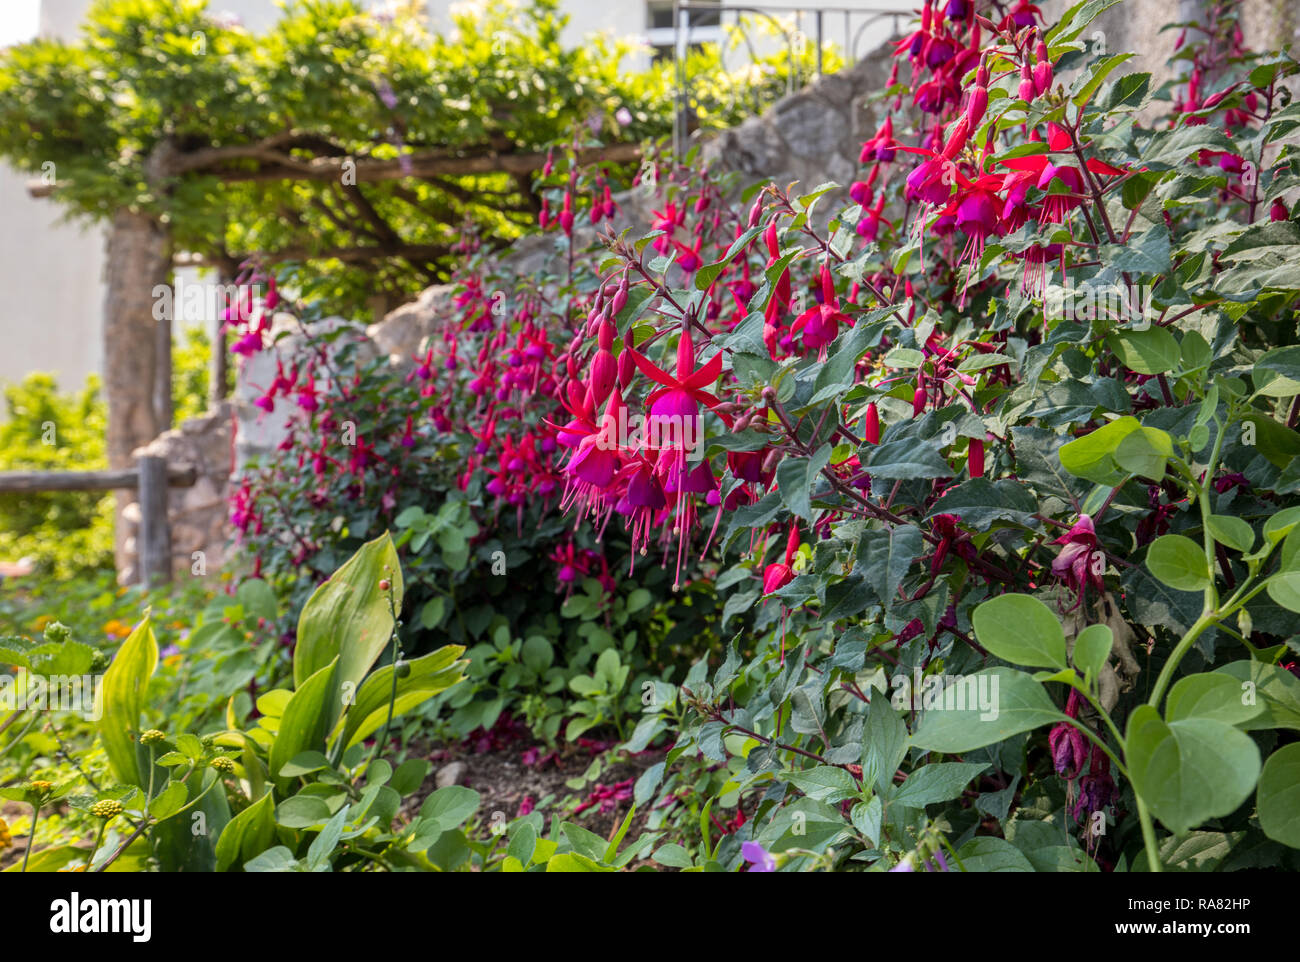 flowers of red dipladenia mandevilla in garden Stock Photo - Alamy